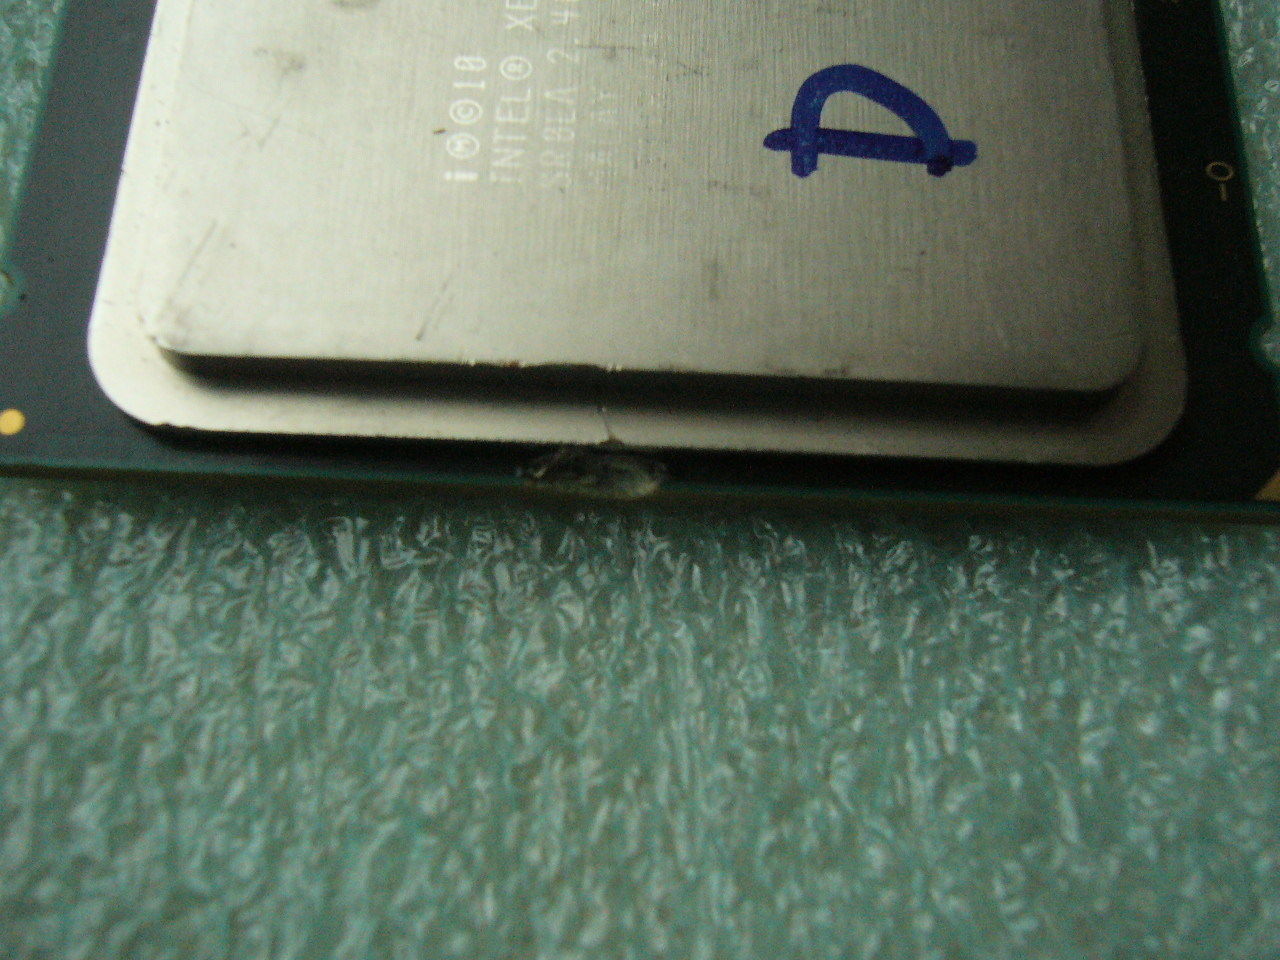 QTY 1x Intel CPU E5-2609 CPU 4-Cores 2.4Ghz LGA2011 SR0LA damaged - Click Image to Close